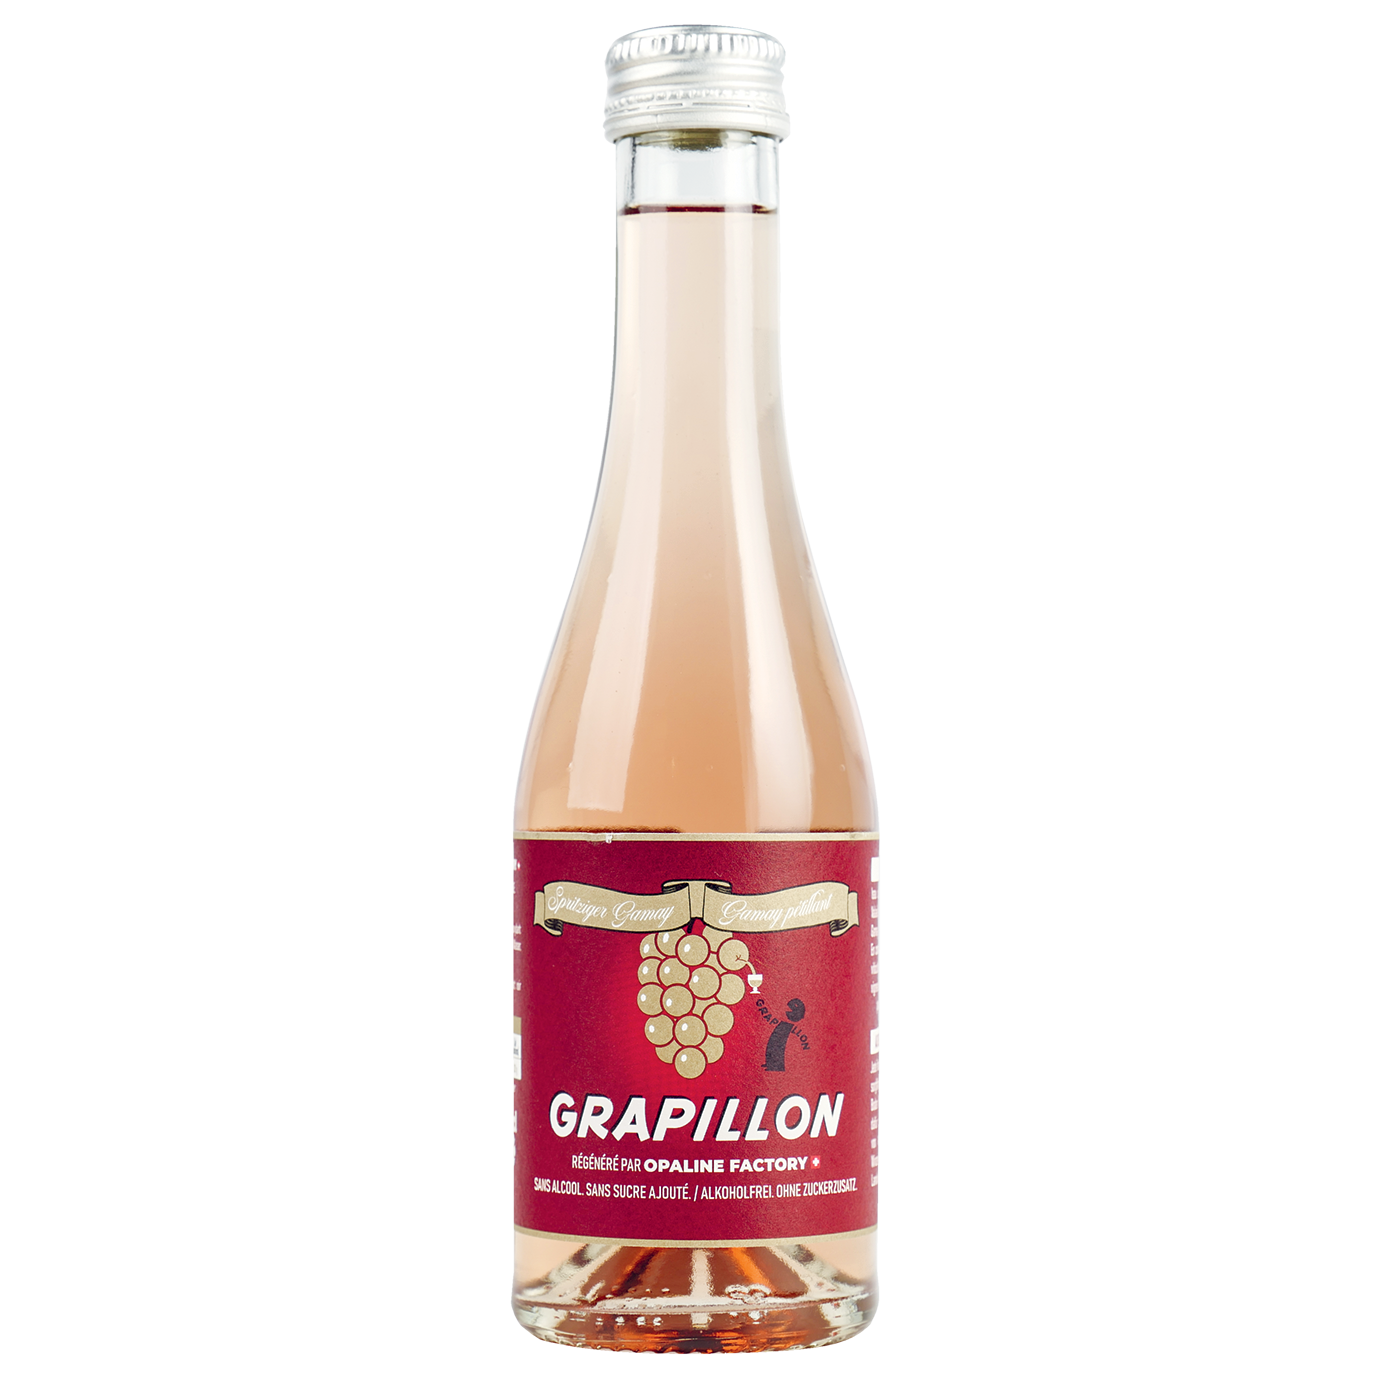 Grapillon - rosé de Gamay pétillant (sans alcool)